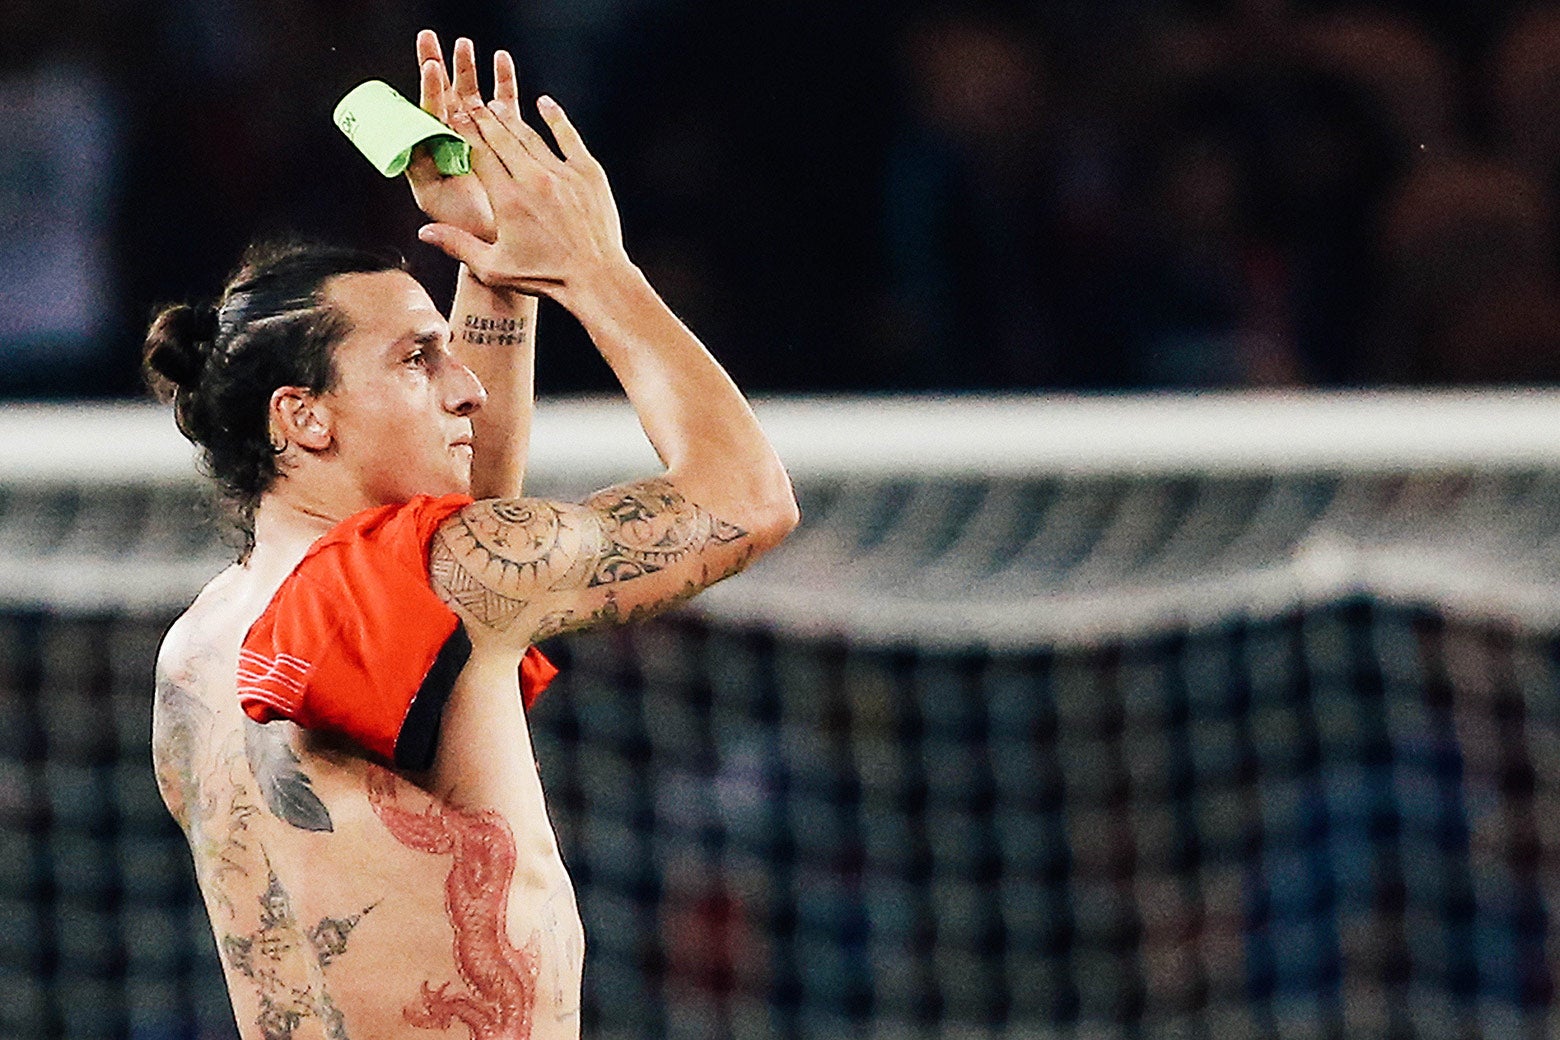 See Man U striker Zlatan Ibrahimovic's massive Tiger tattoos on his back  (photo)